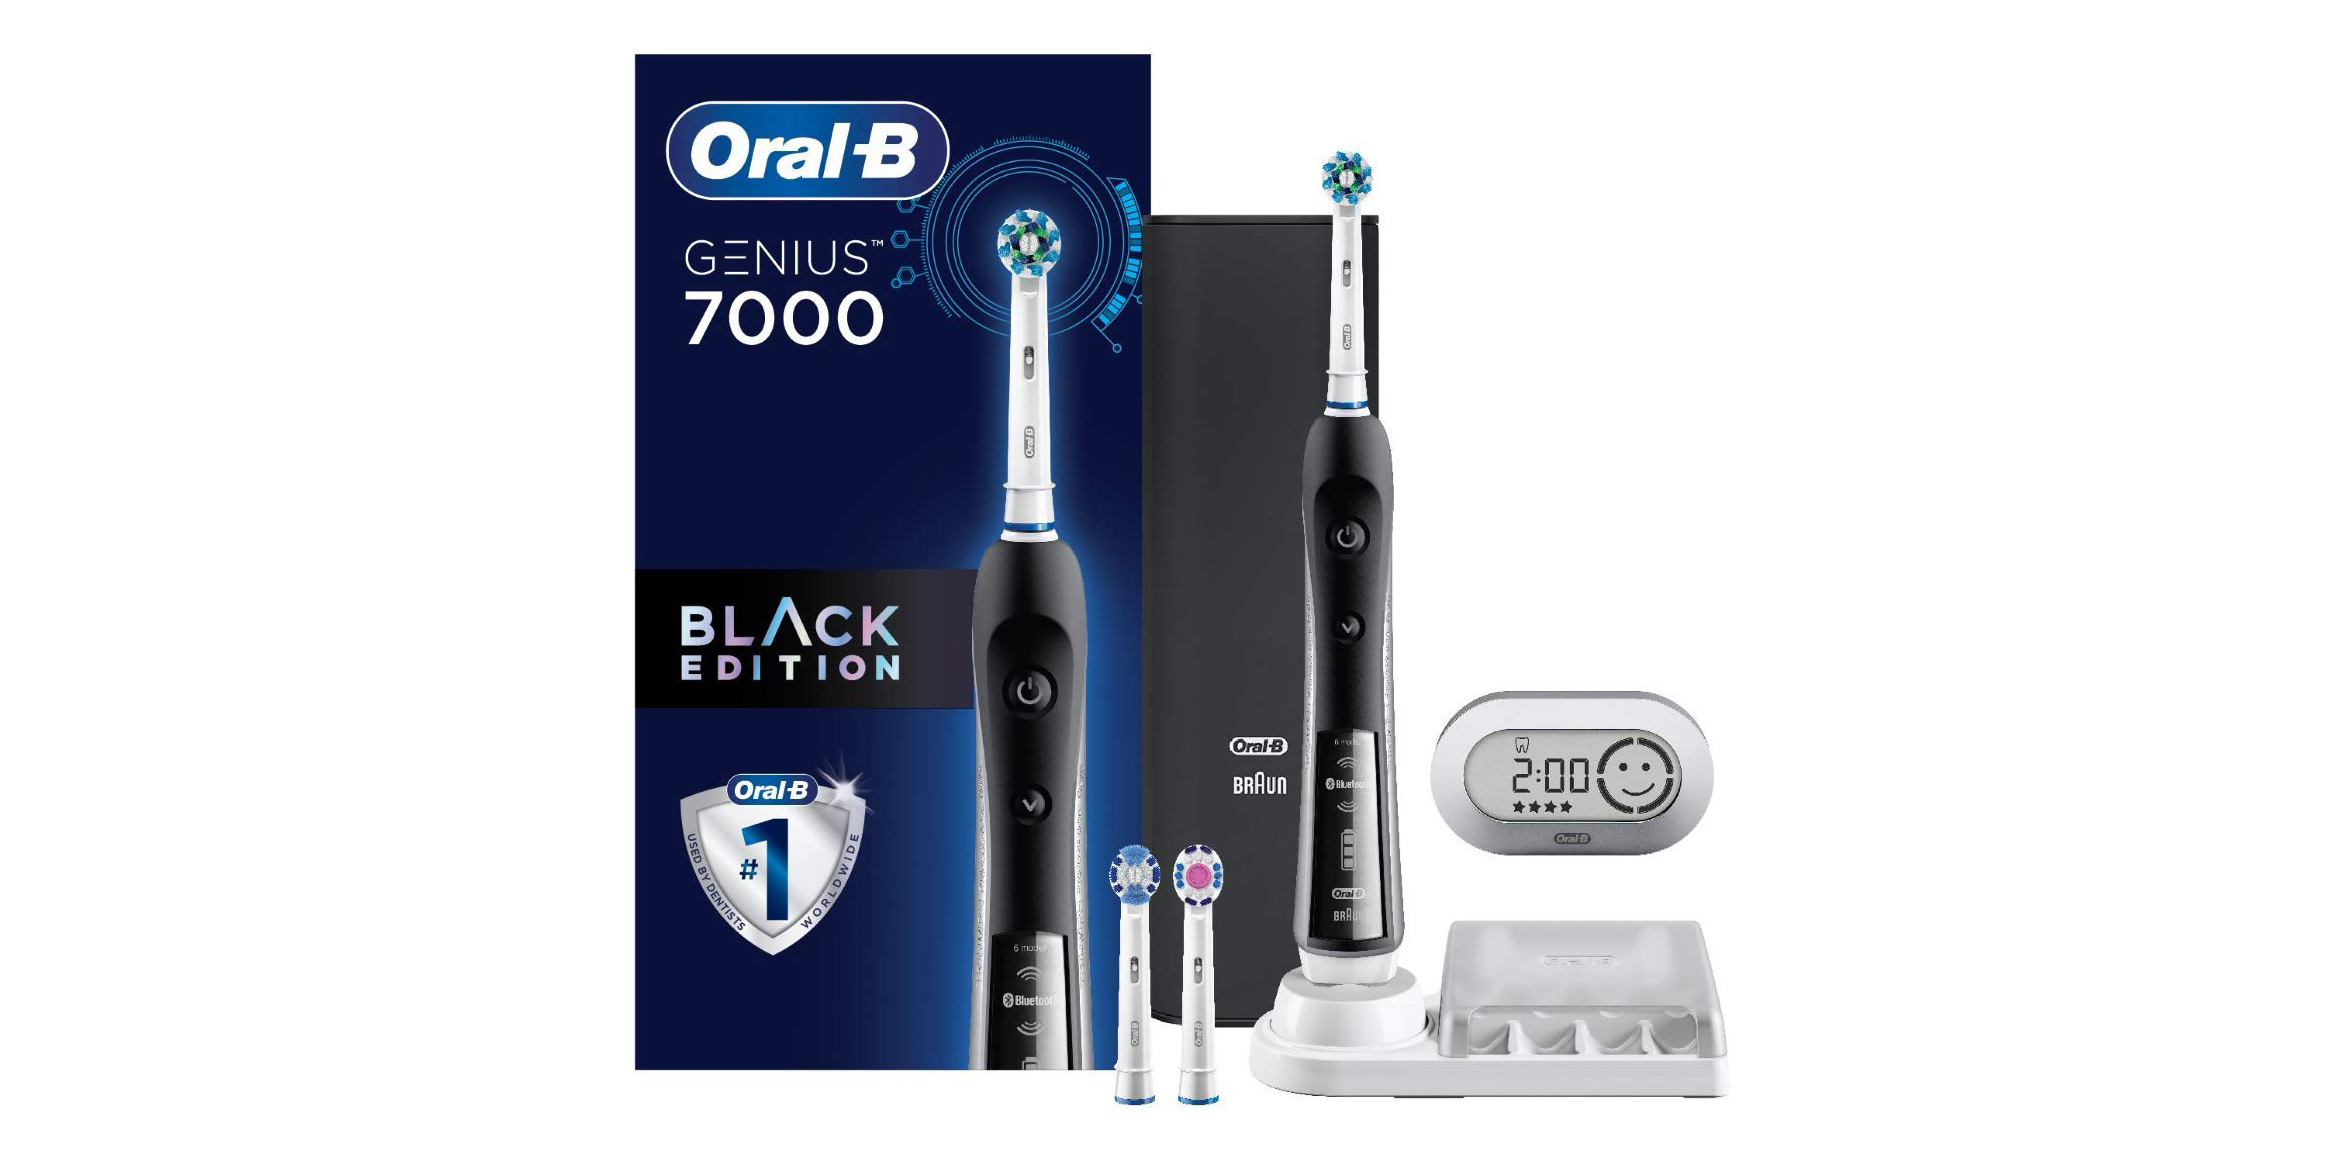 Spotlijster Hij Met pensioen gaan Oral-B Pro 7000 Bluetooth Toothbrush now $80 at Amazon (37% off) + more  from $23